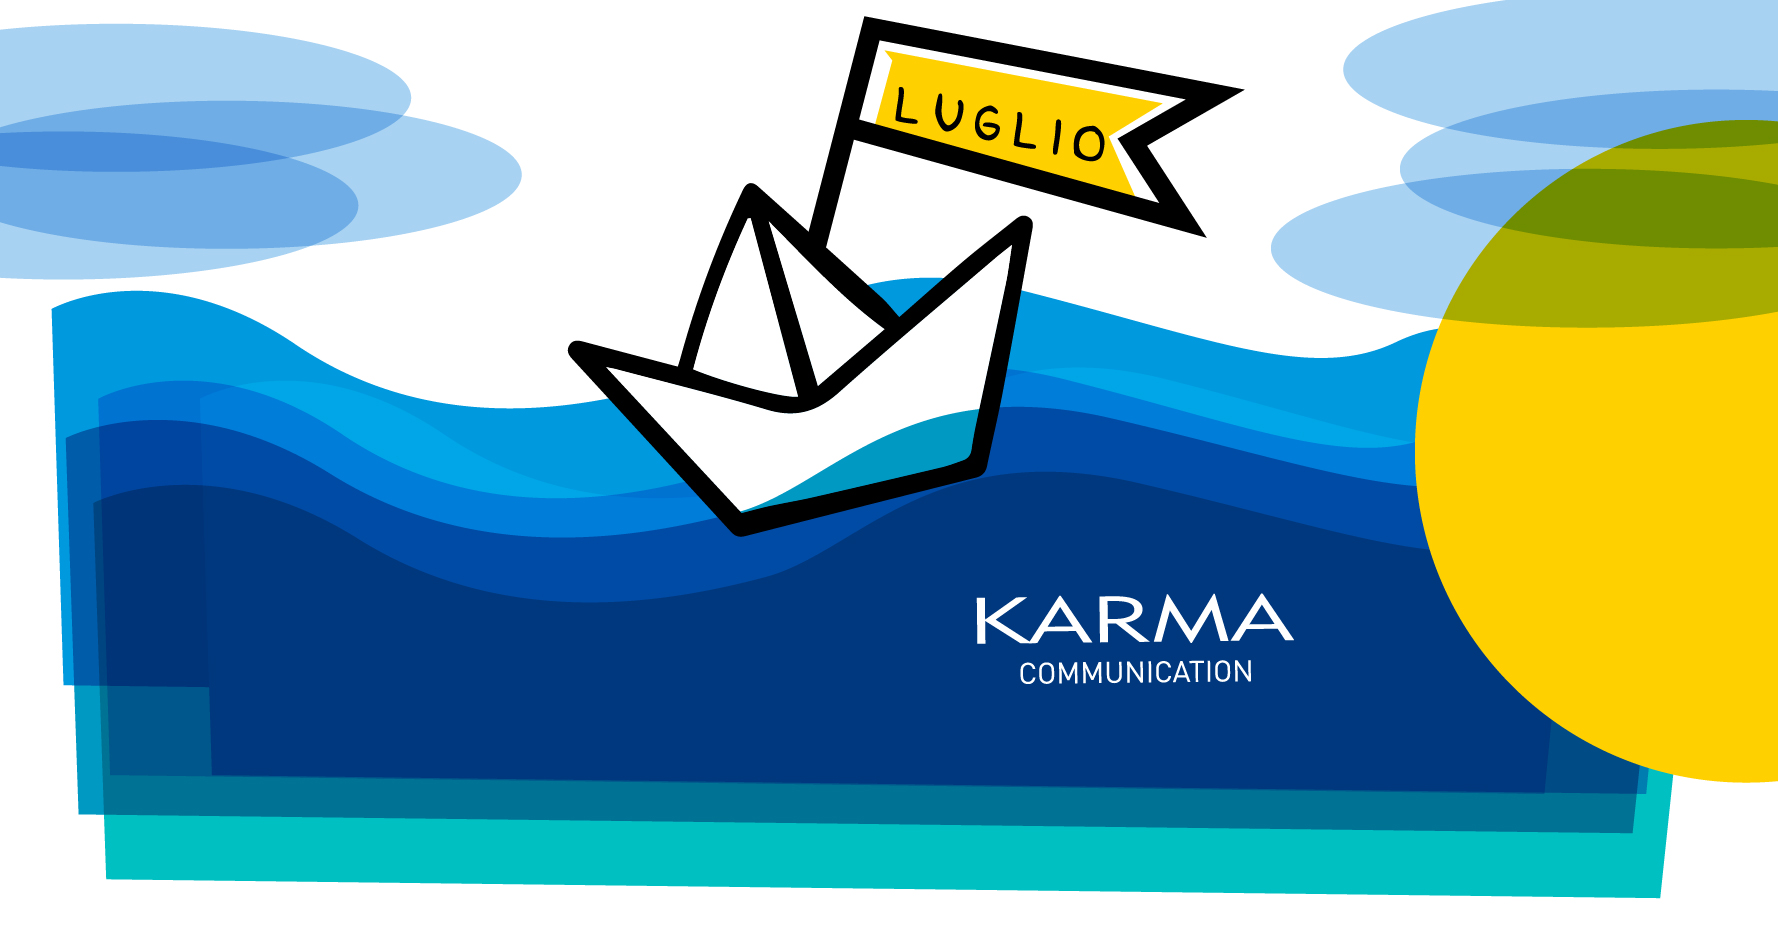 Karma Communication - Luglio già mi piaci